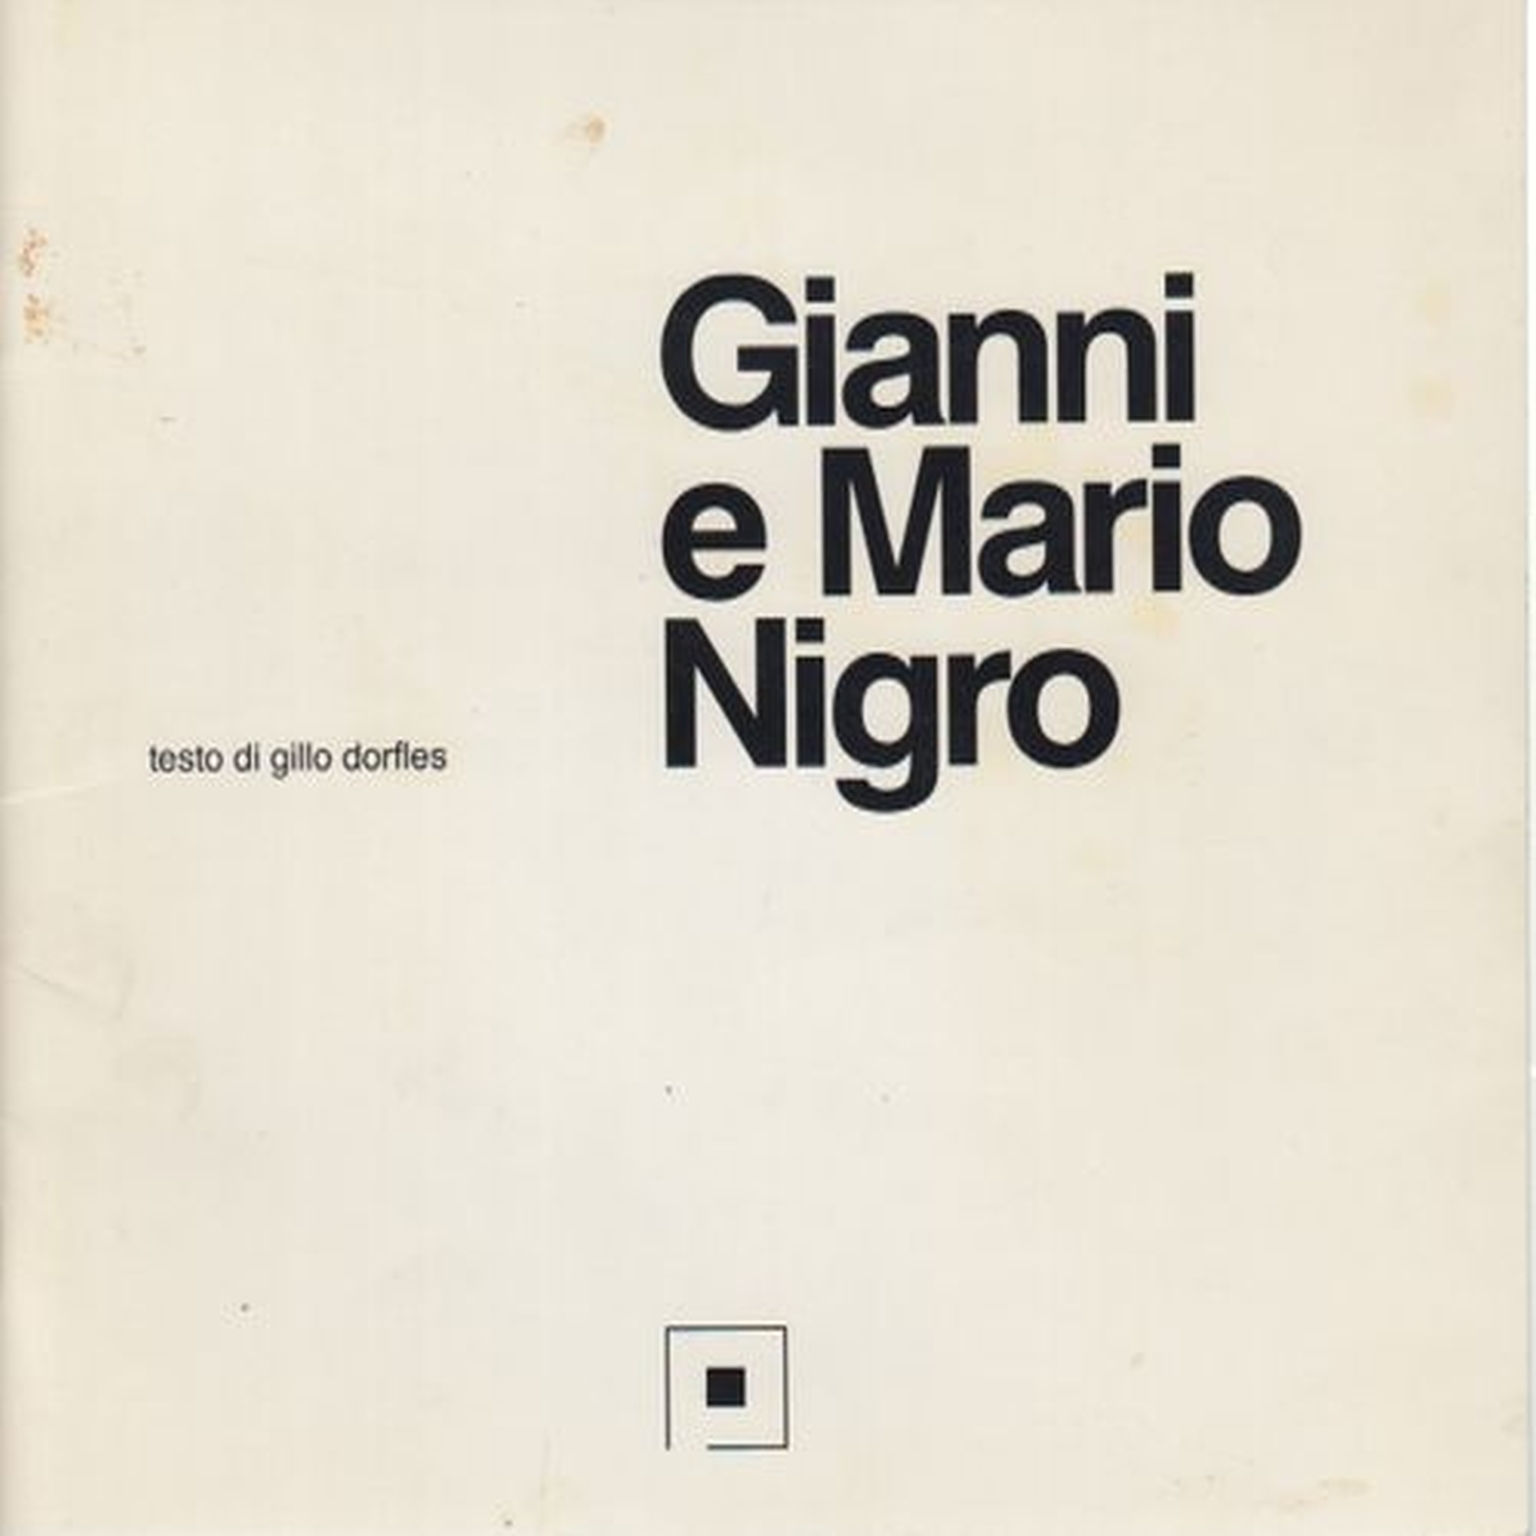 Gianni und Mario Nigro, dörfles